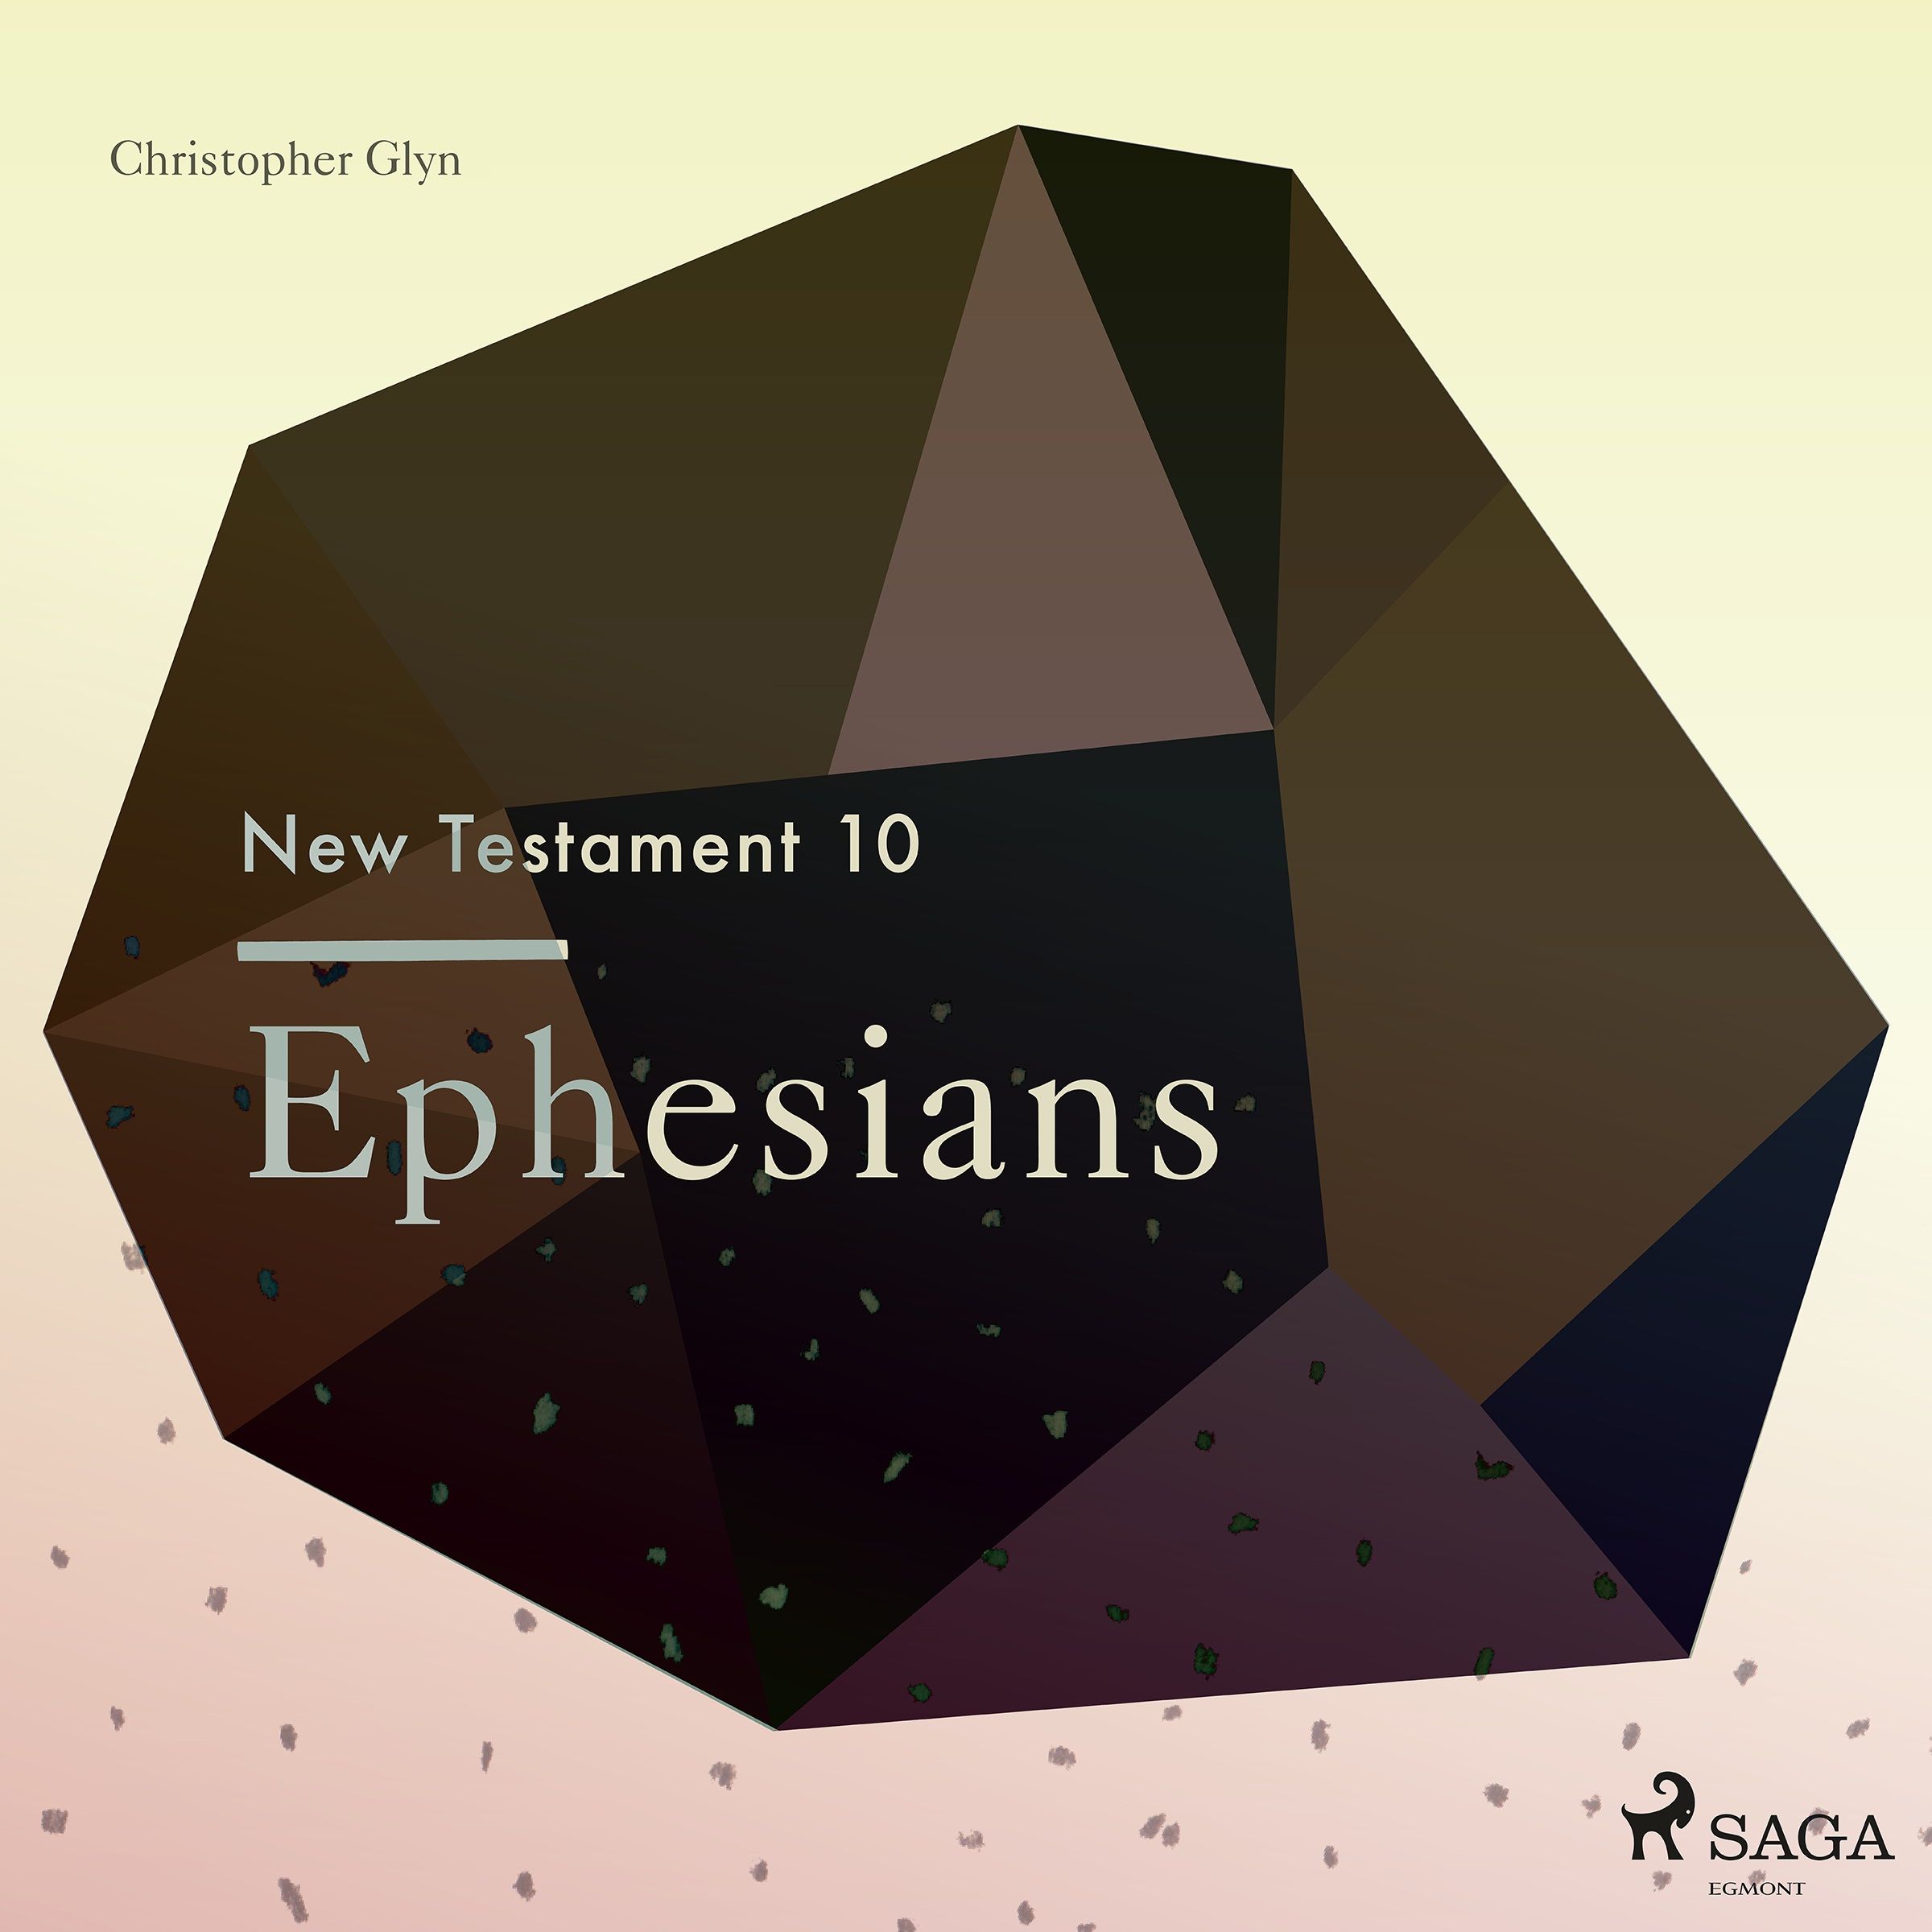 The New Testament 10 - Ephesians, ljudbok av Christopher Glyn